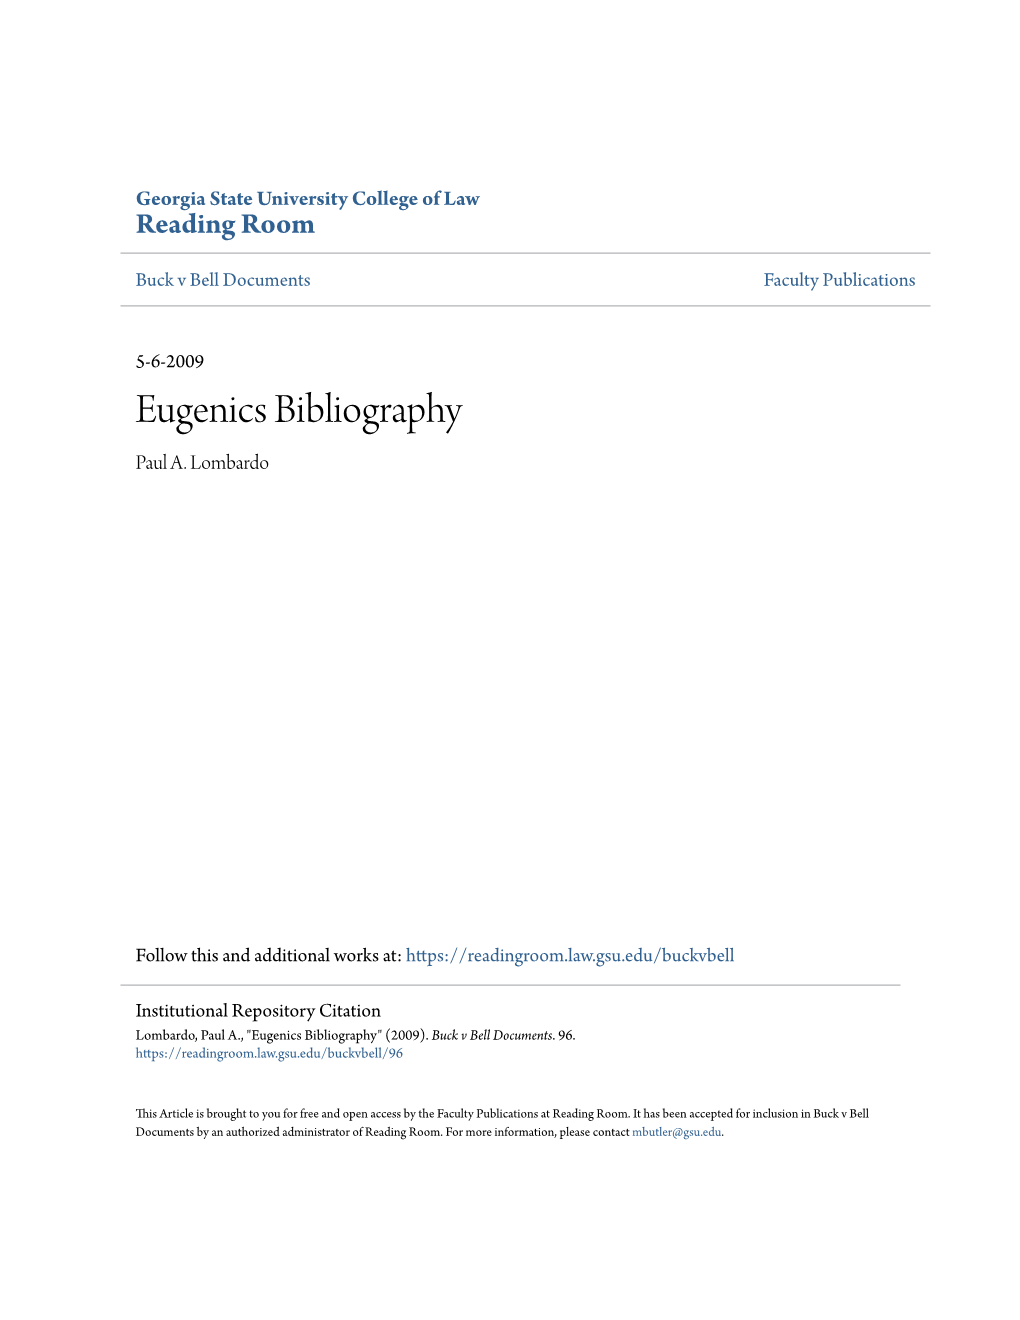 Eugenics Bibliography Paul A